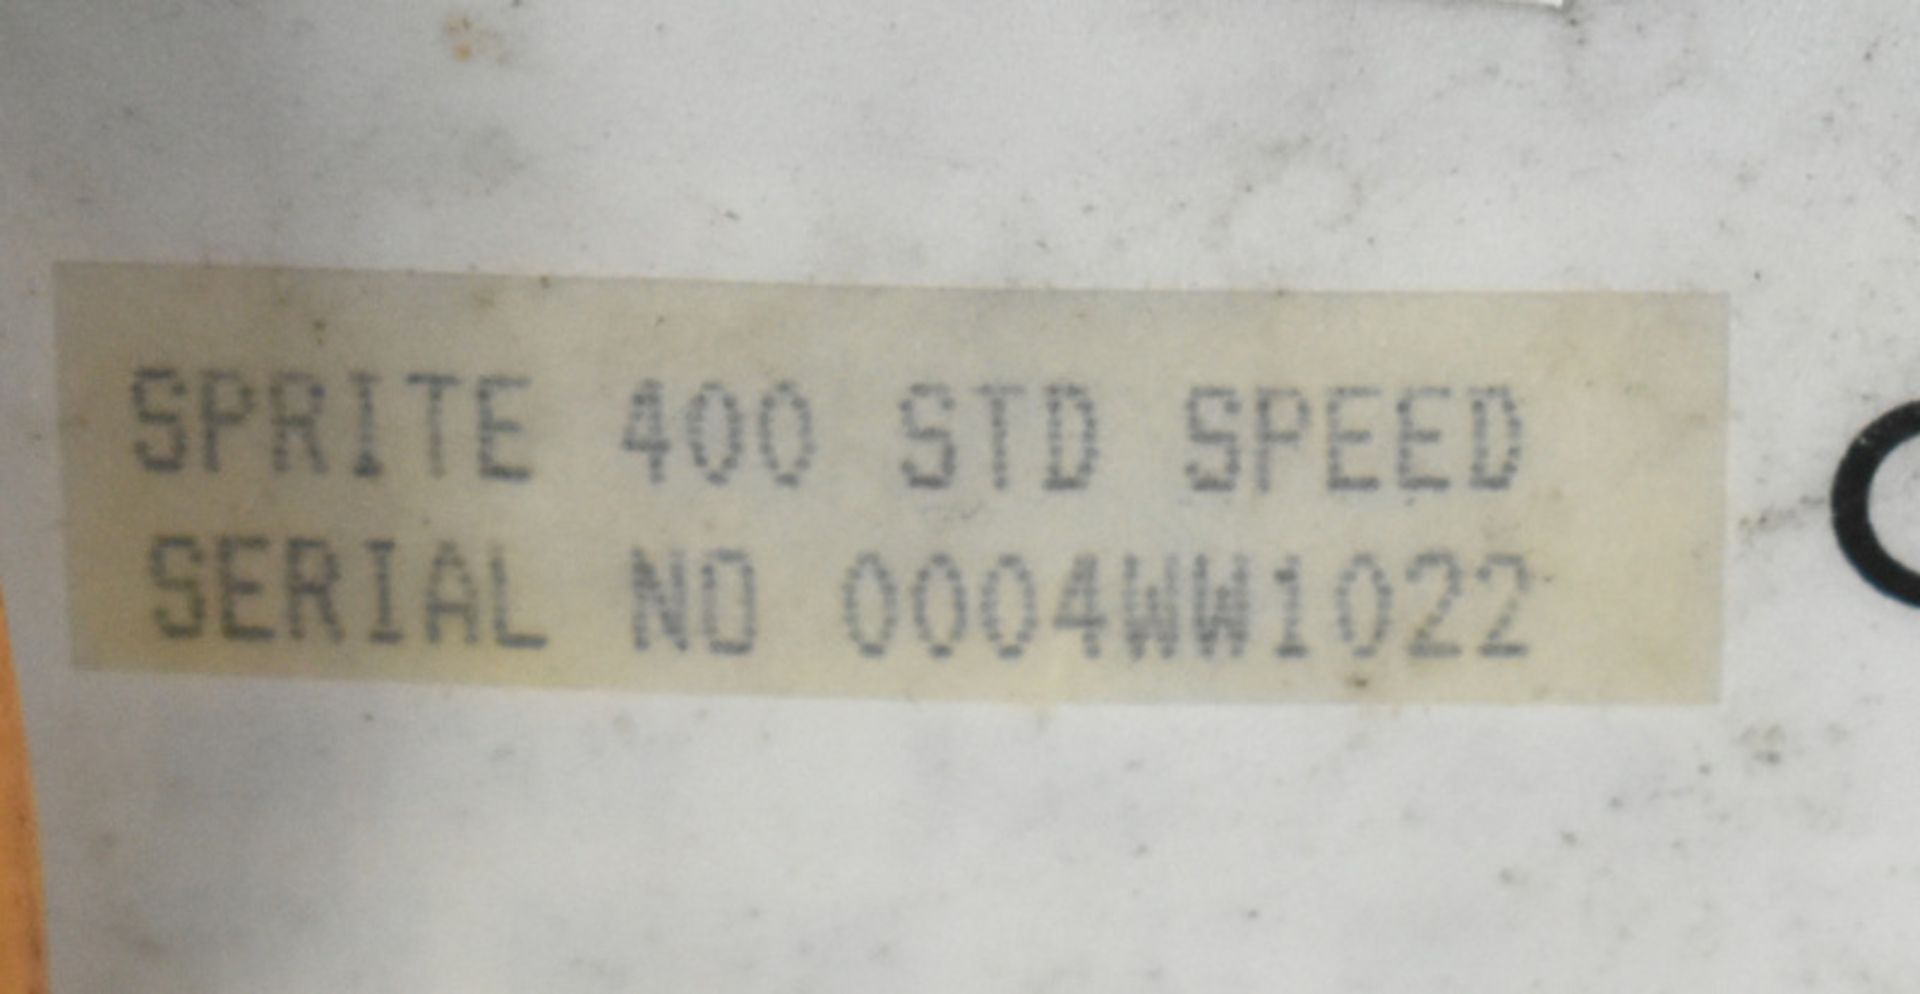 Victor Sprite 400 STD Speed Floor Scrubber - Image 2 of 3